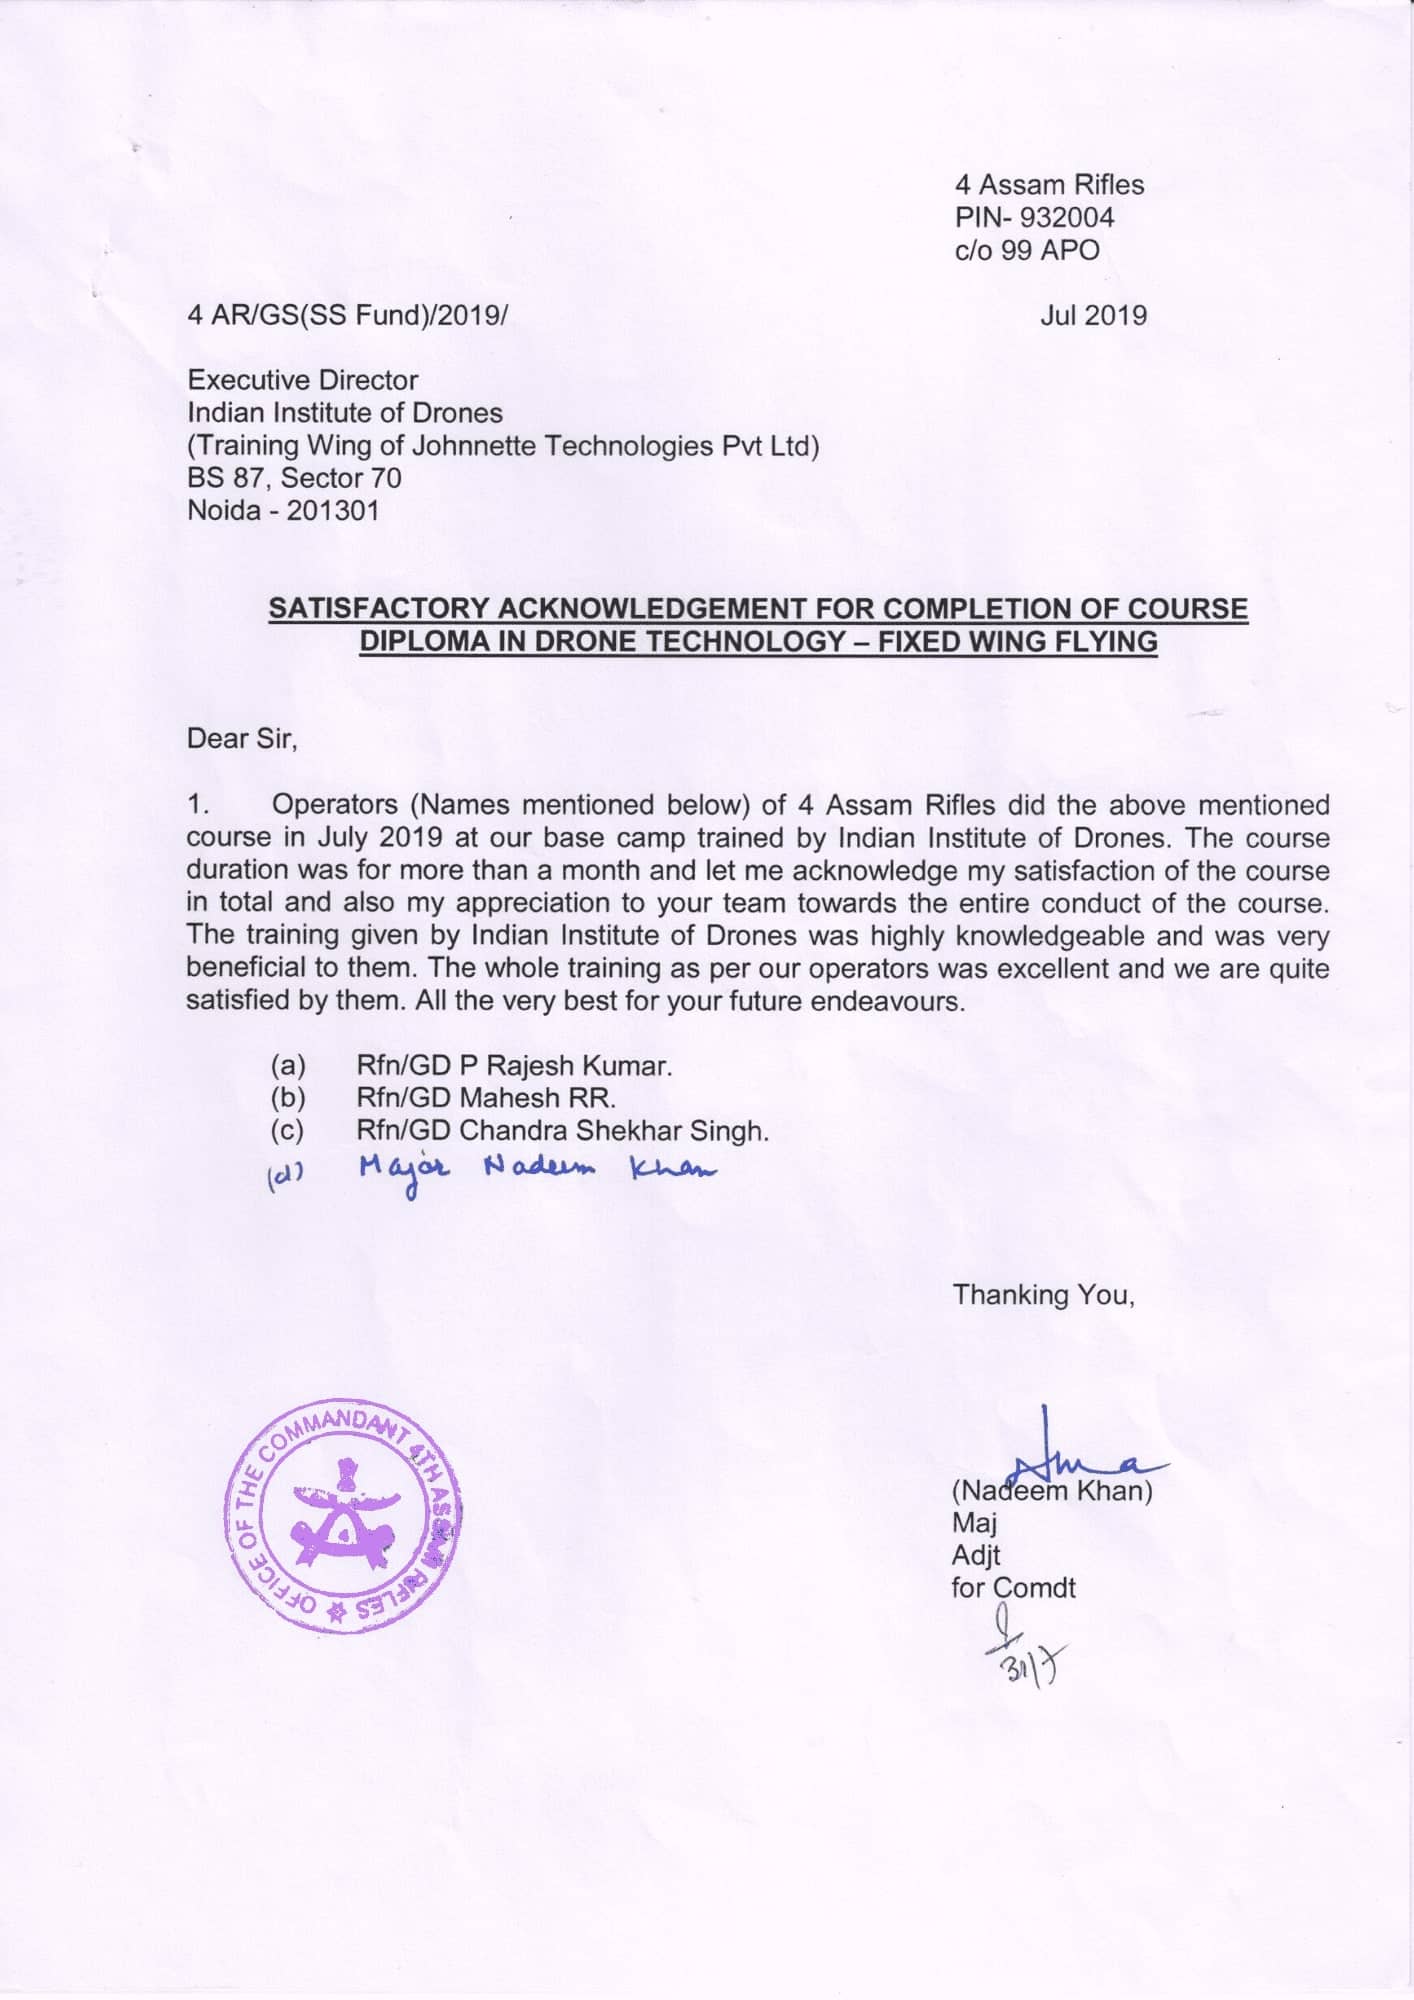 Assam Rifles Satisfactory Letter